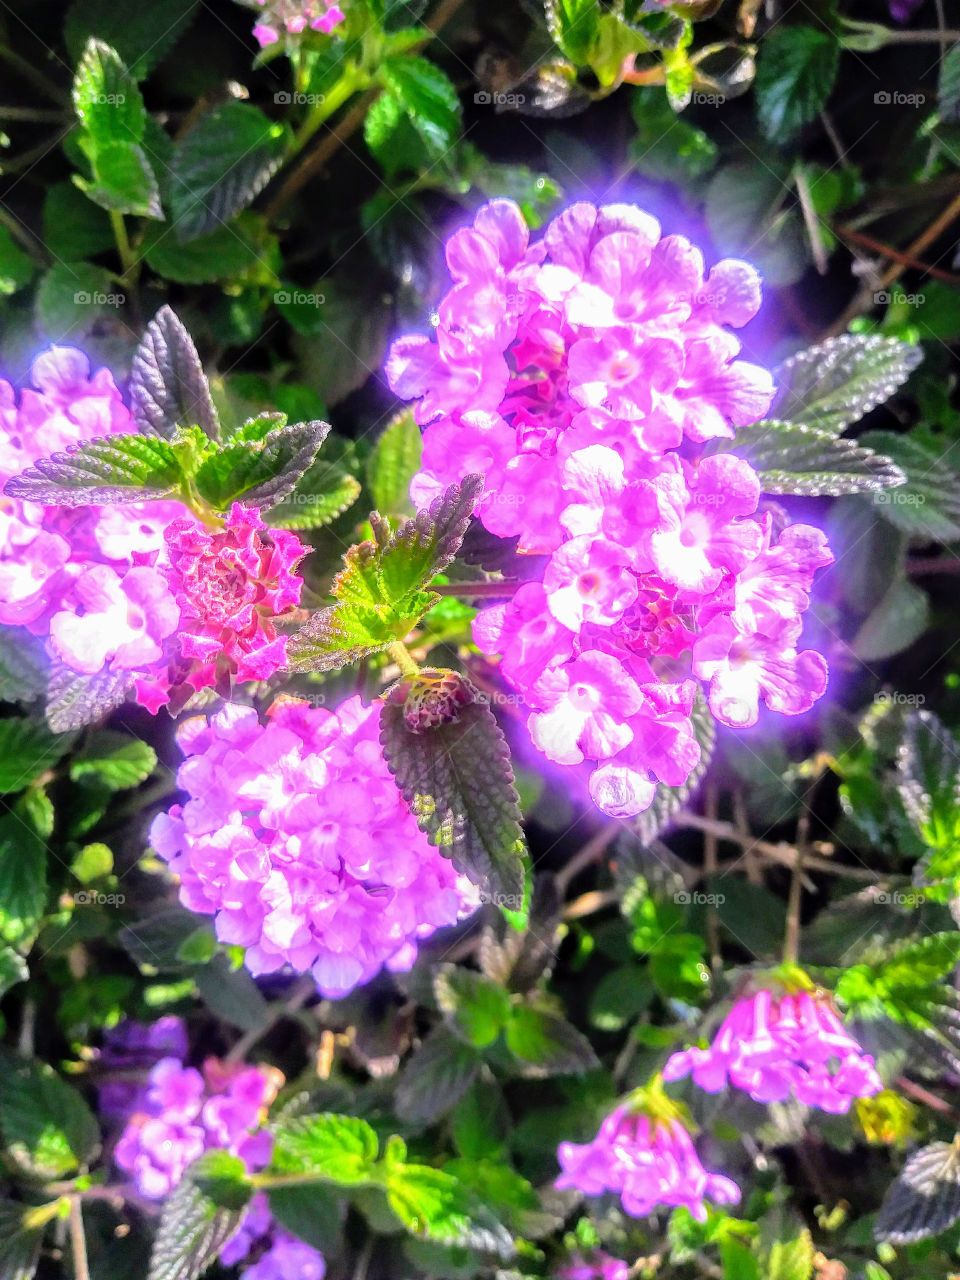 pinkish purplish spring flowers that look like they glow